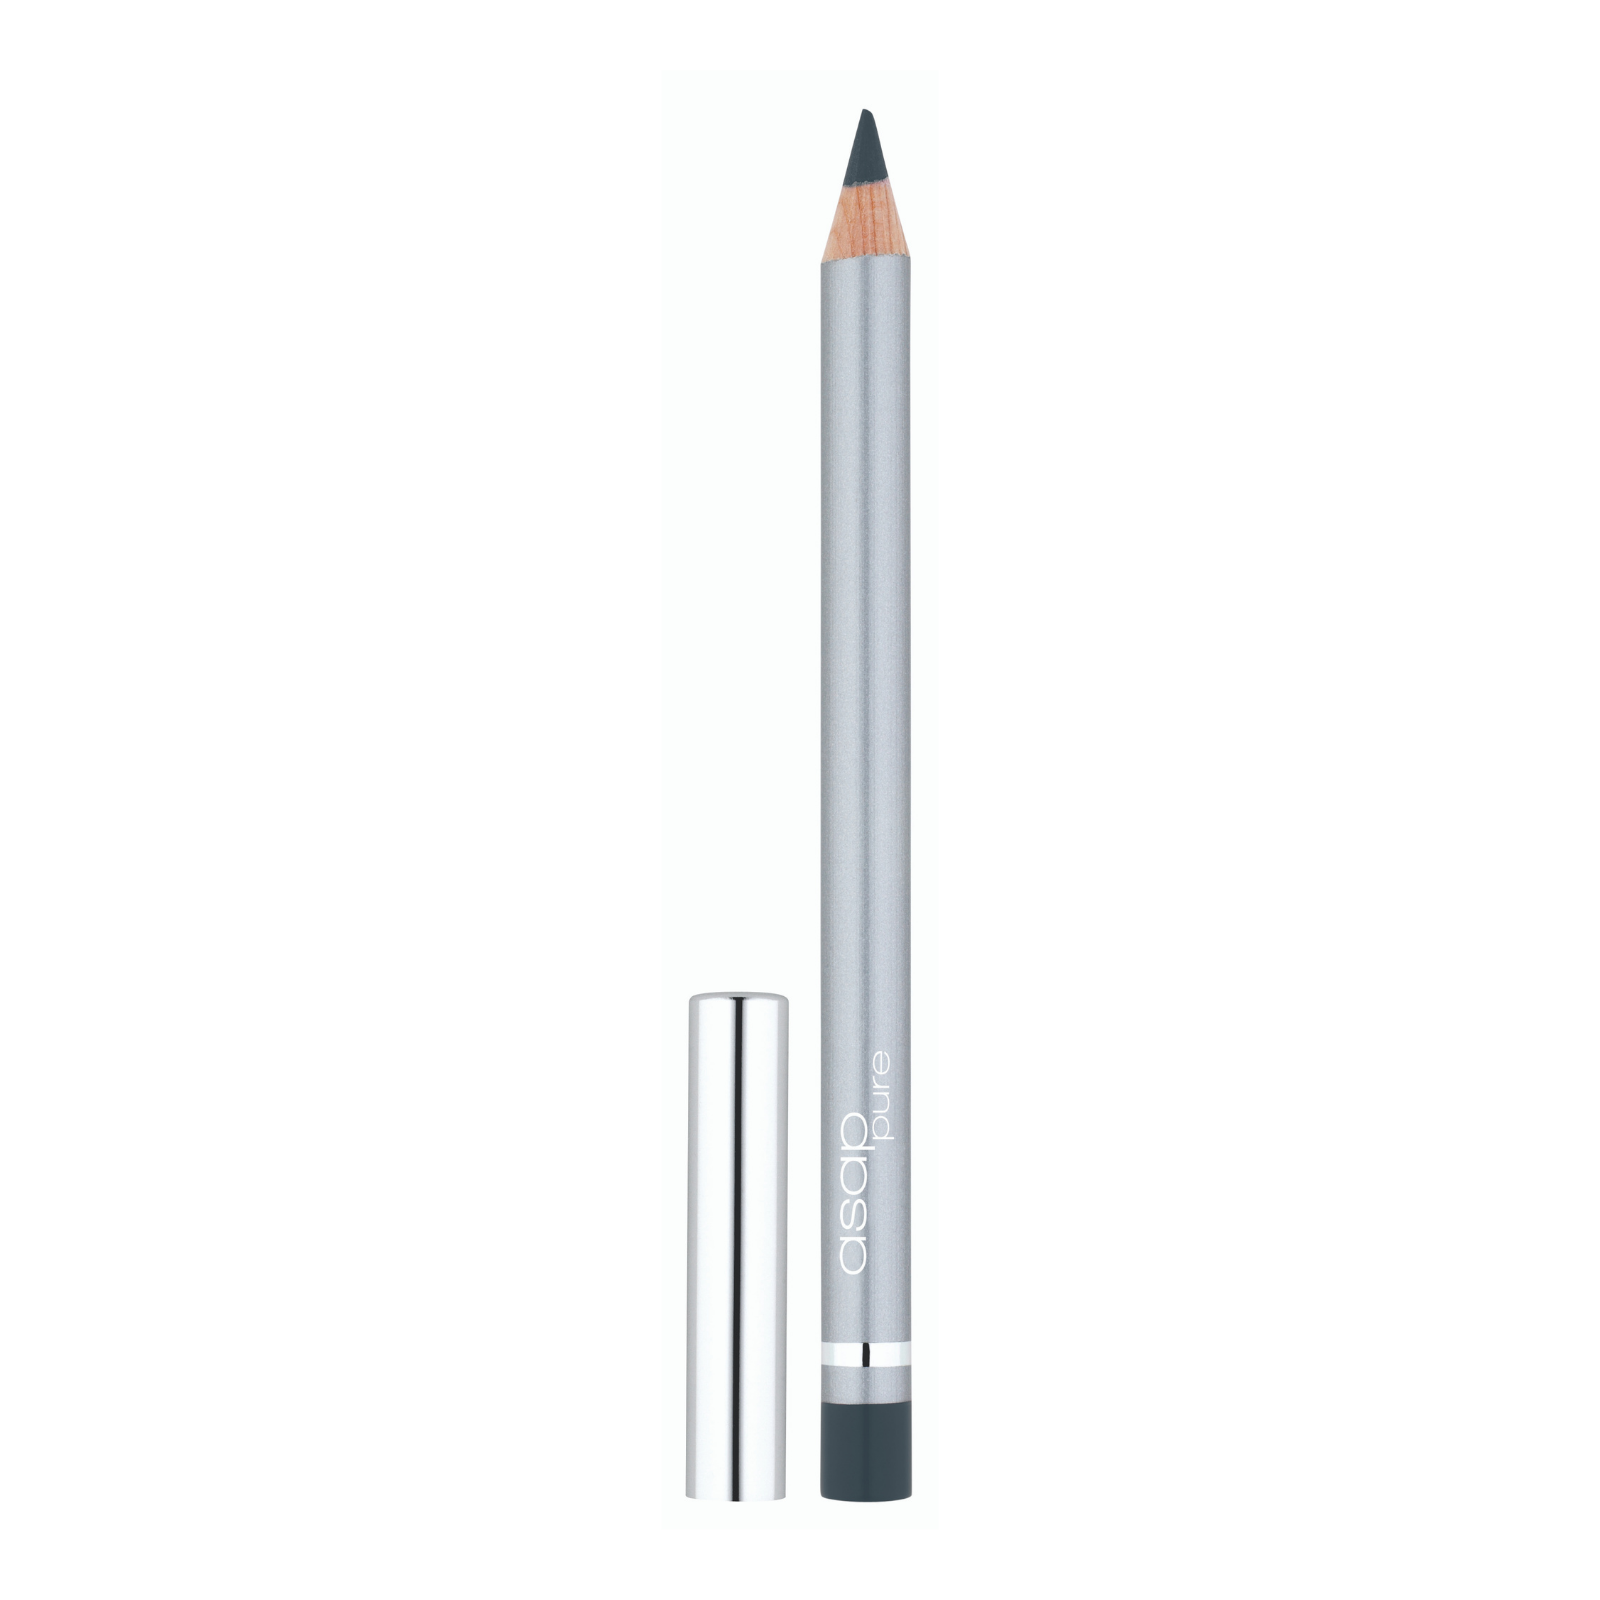 ASAP Mineral Eye Pencil - Charcoal 1.13g